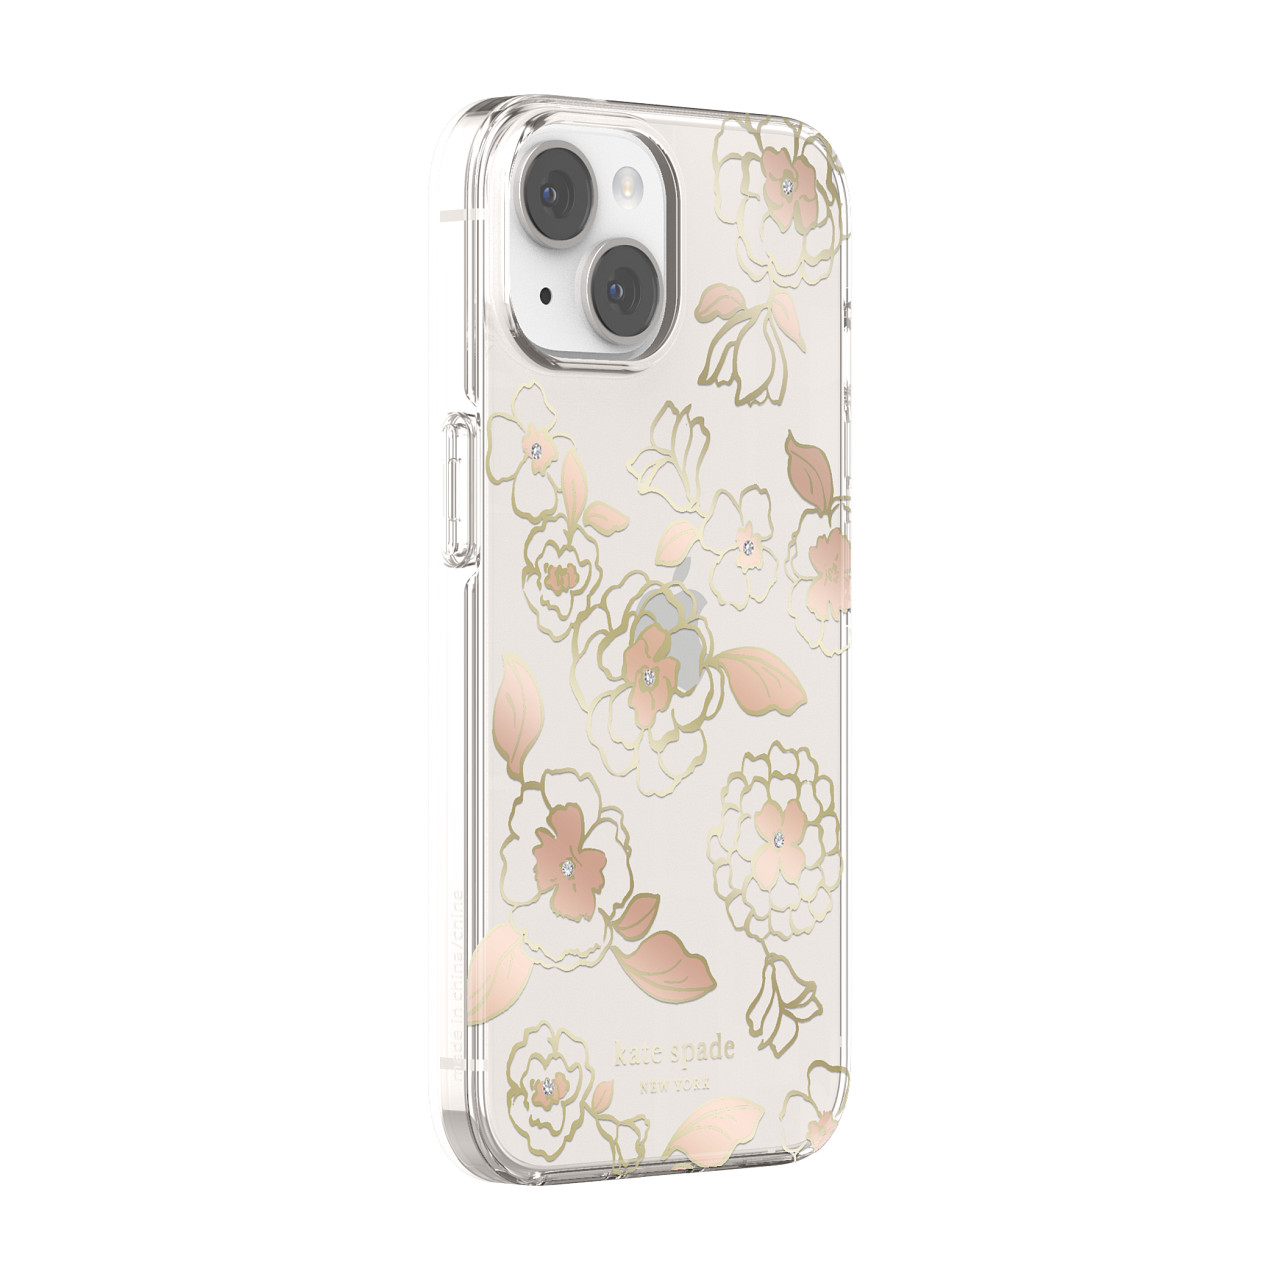 Kate Spade New York รุ่น Protective Hardshell Case - เคส iPhone 14 - ลาย Gold Floral